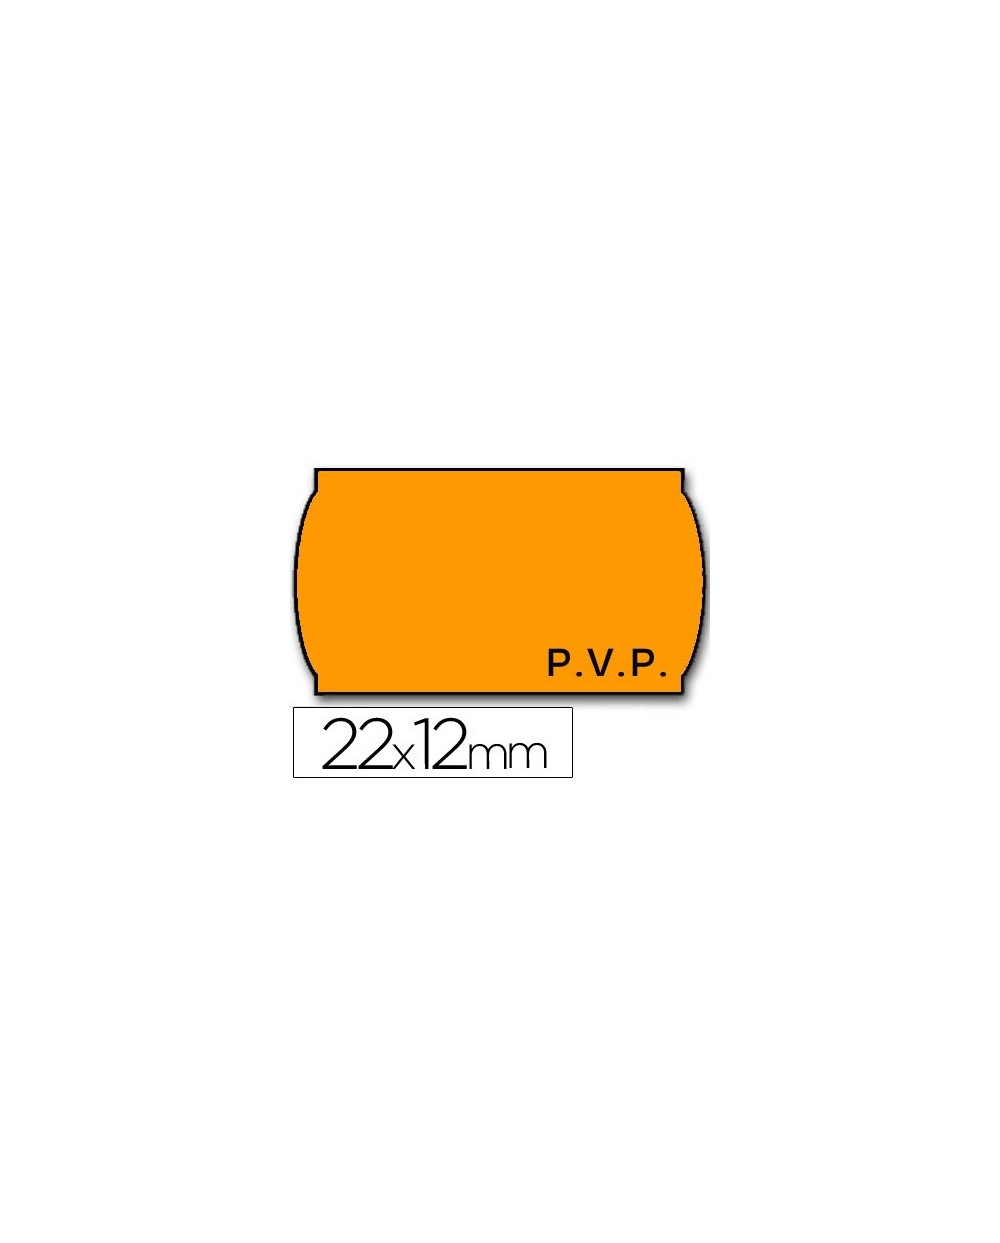 Etiquetas meto onduladas 22 x 12 mm pvp fn adh 2 fluor naranja rollo 1500 etiquetas